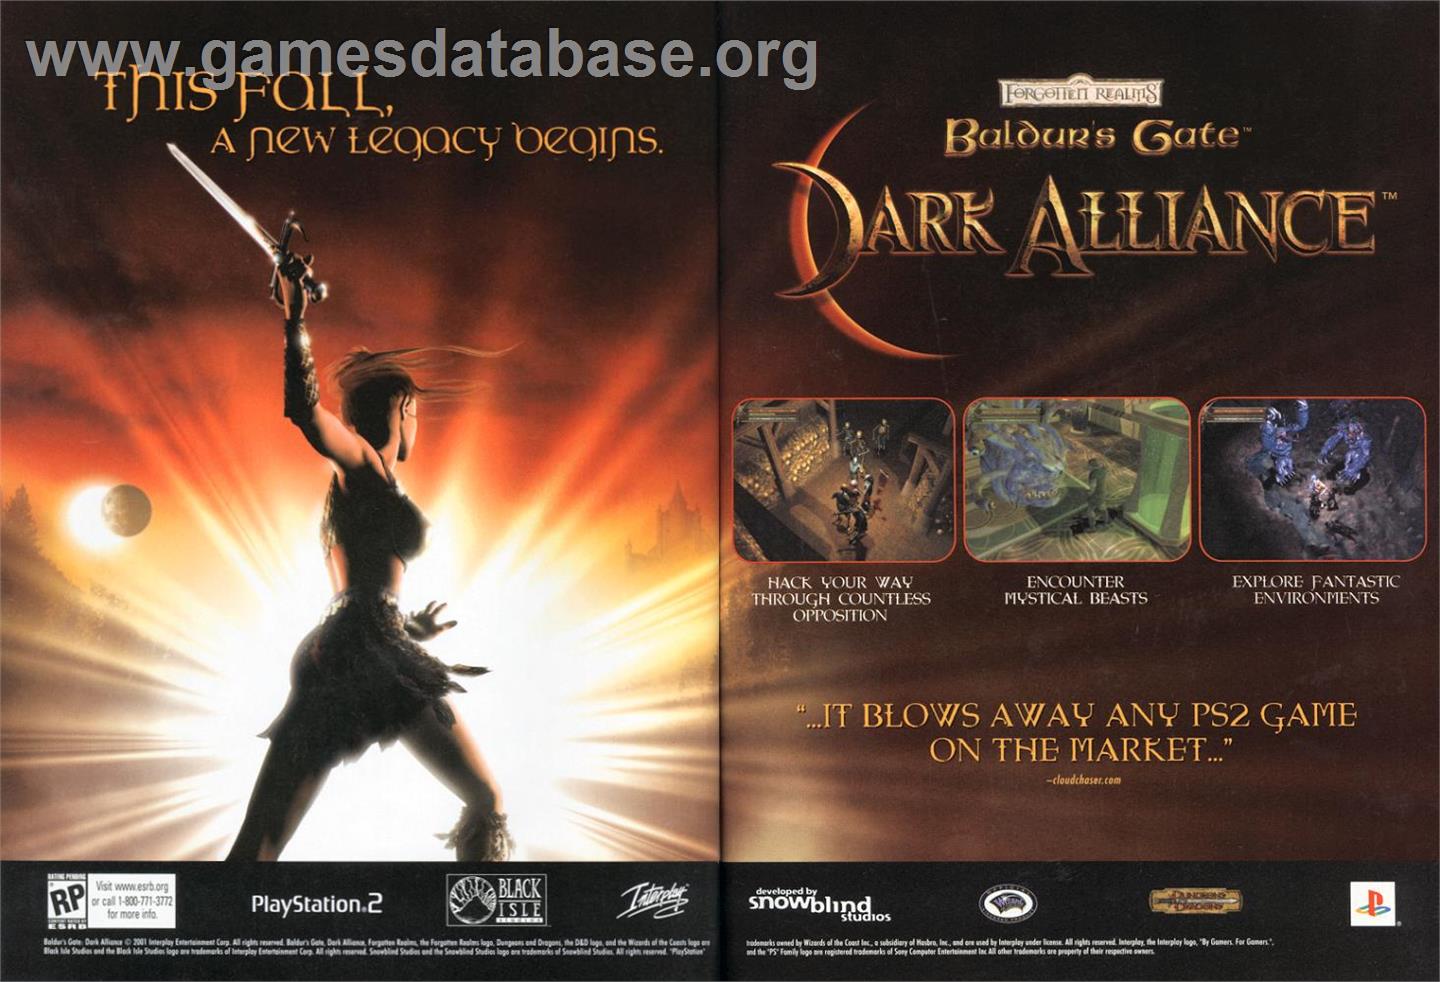 Baldur's Gate: Dark Alliance - Sony Playstation 2 - Artwork - Advert